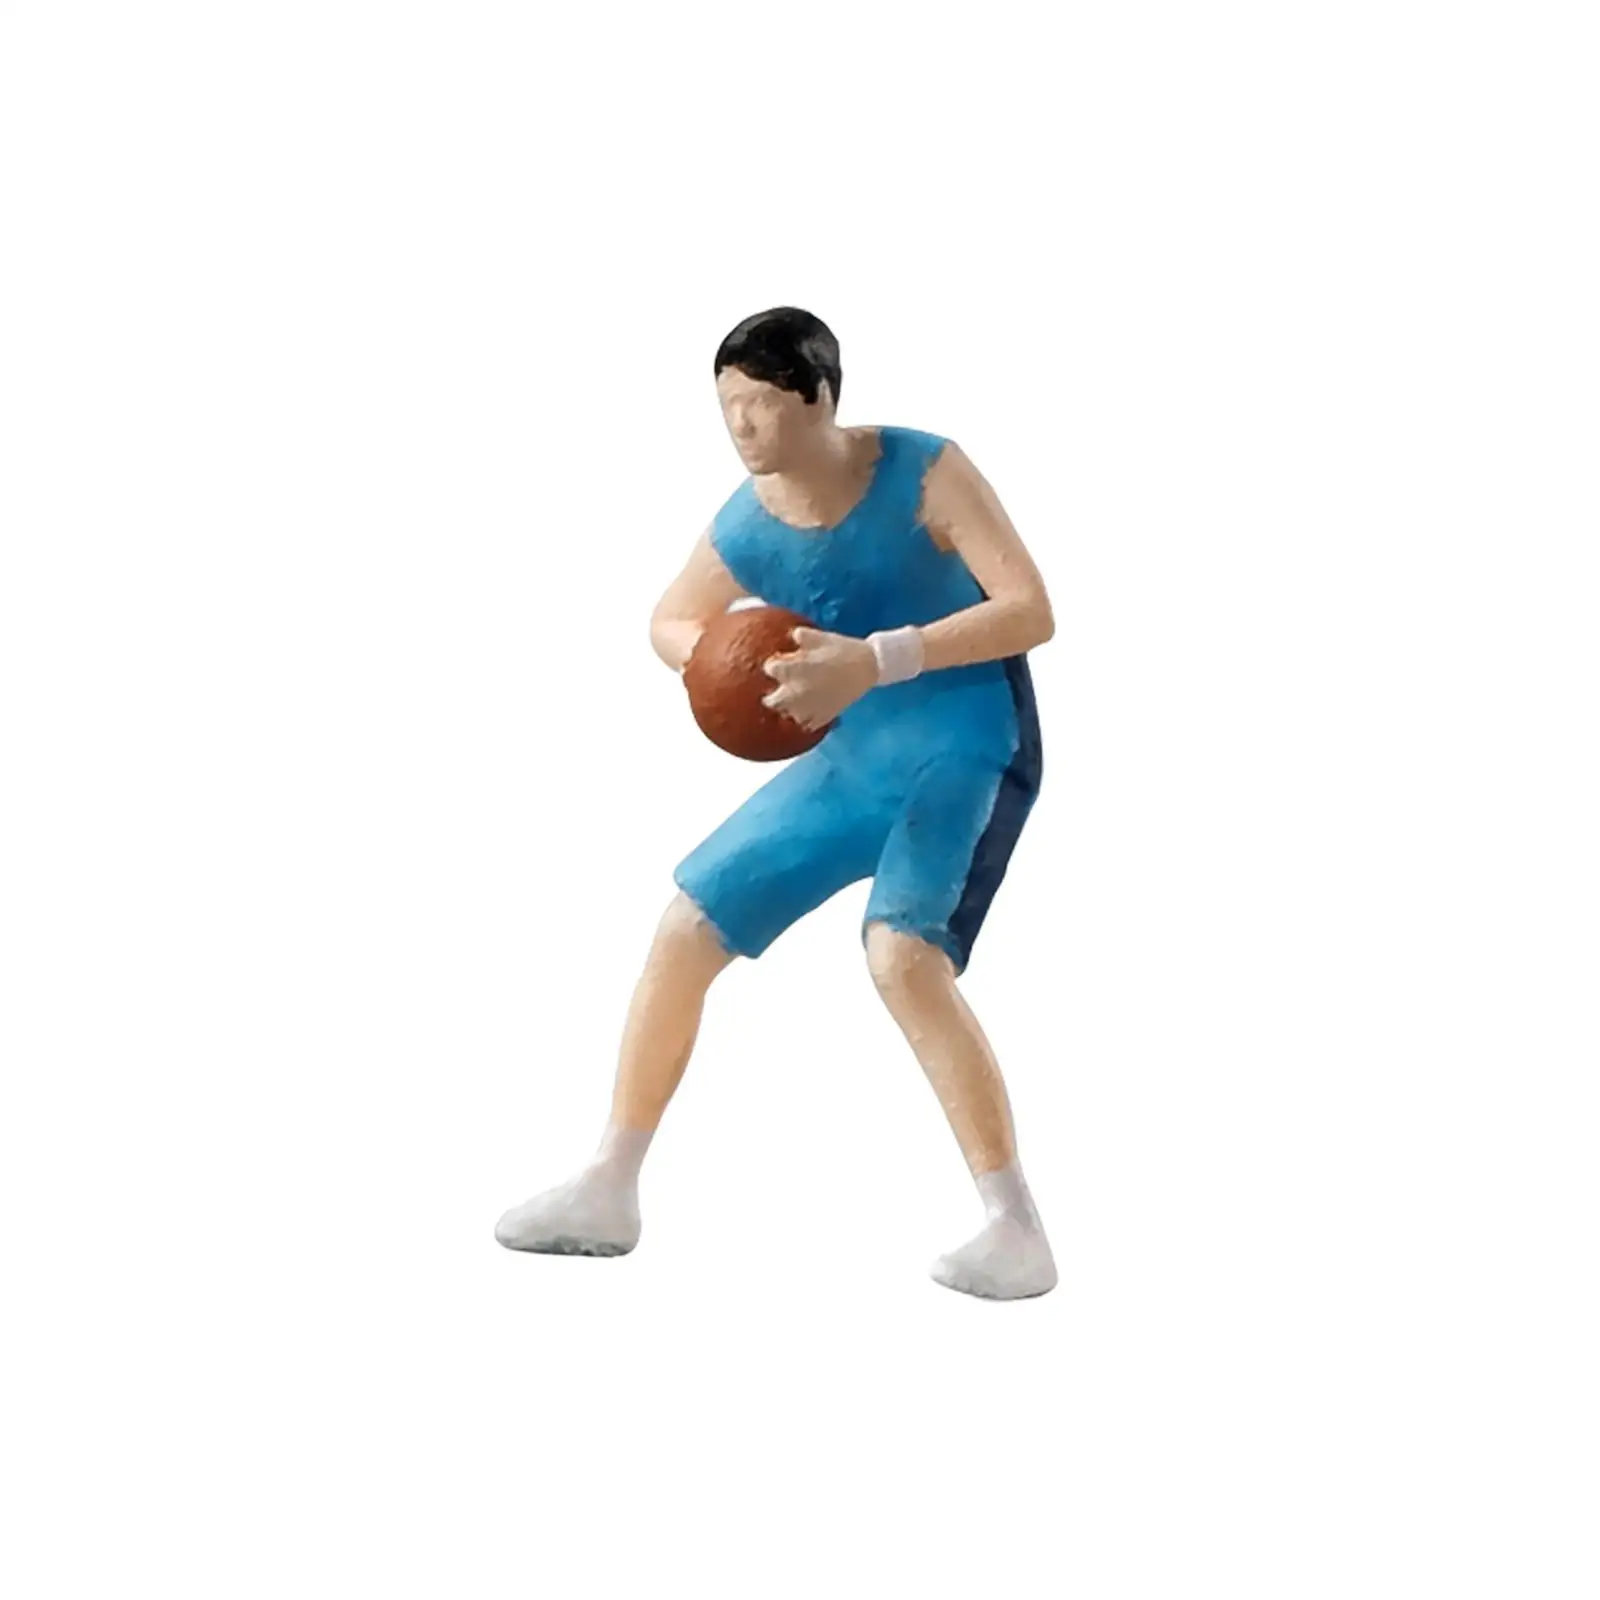 1/64 People Figures Tiny People Model, Basketball Boy Figures, Mini People Figurines for Miniature Scene